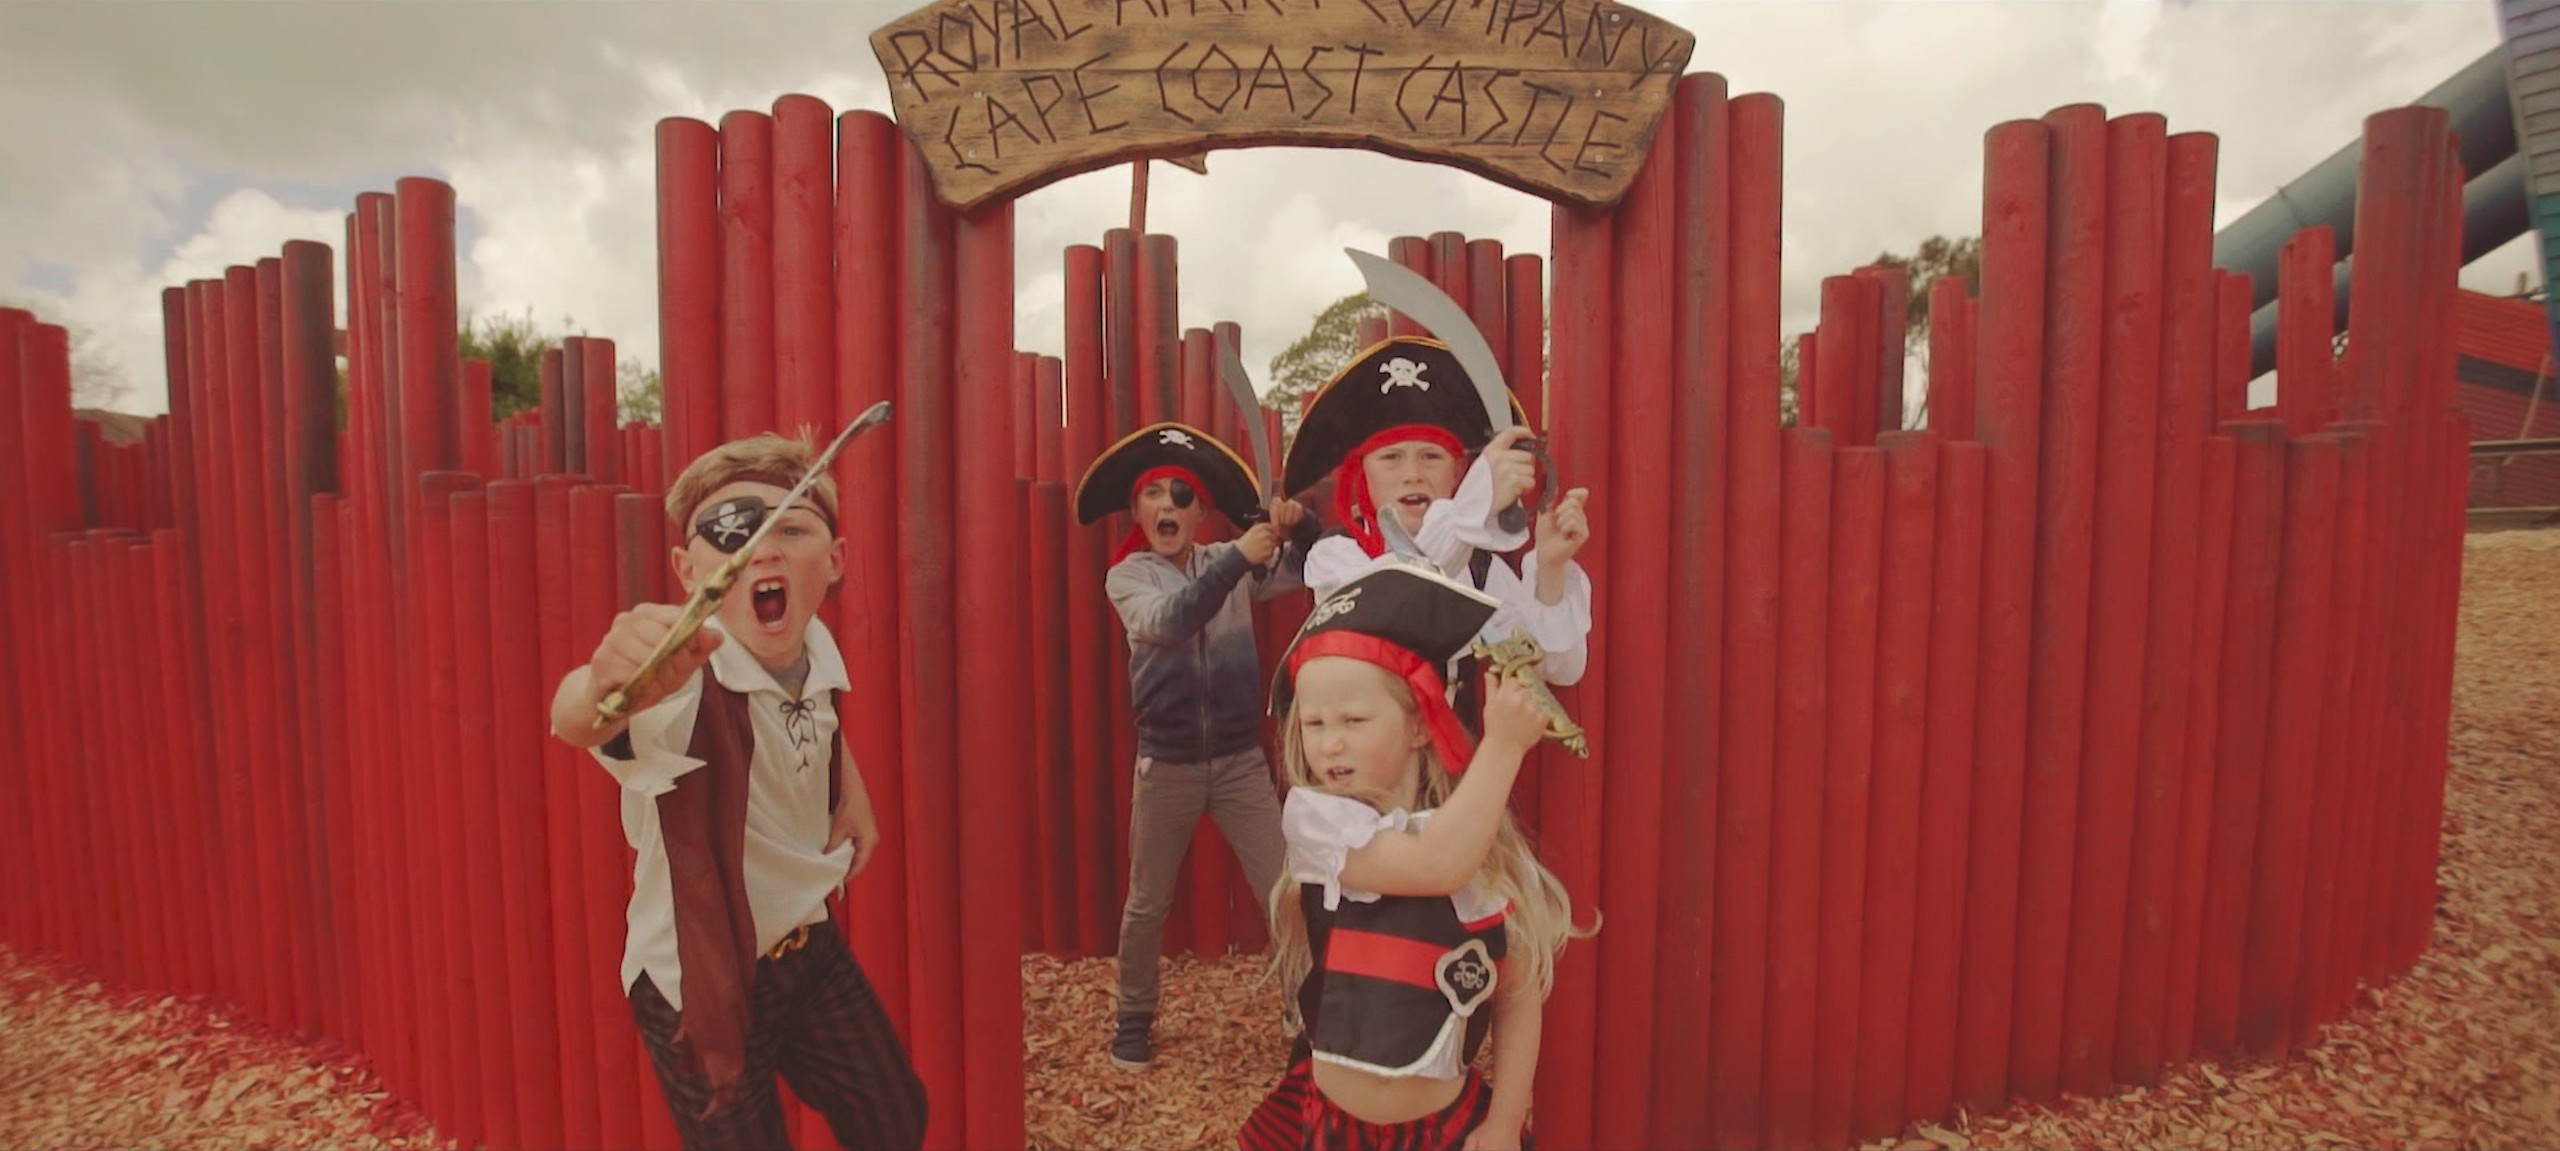 Pirate adventure play park